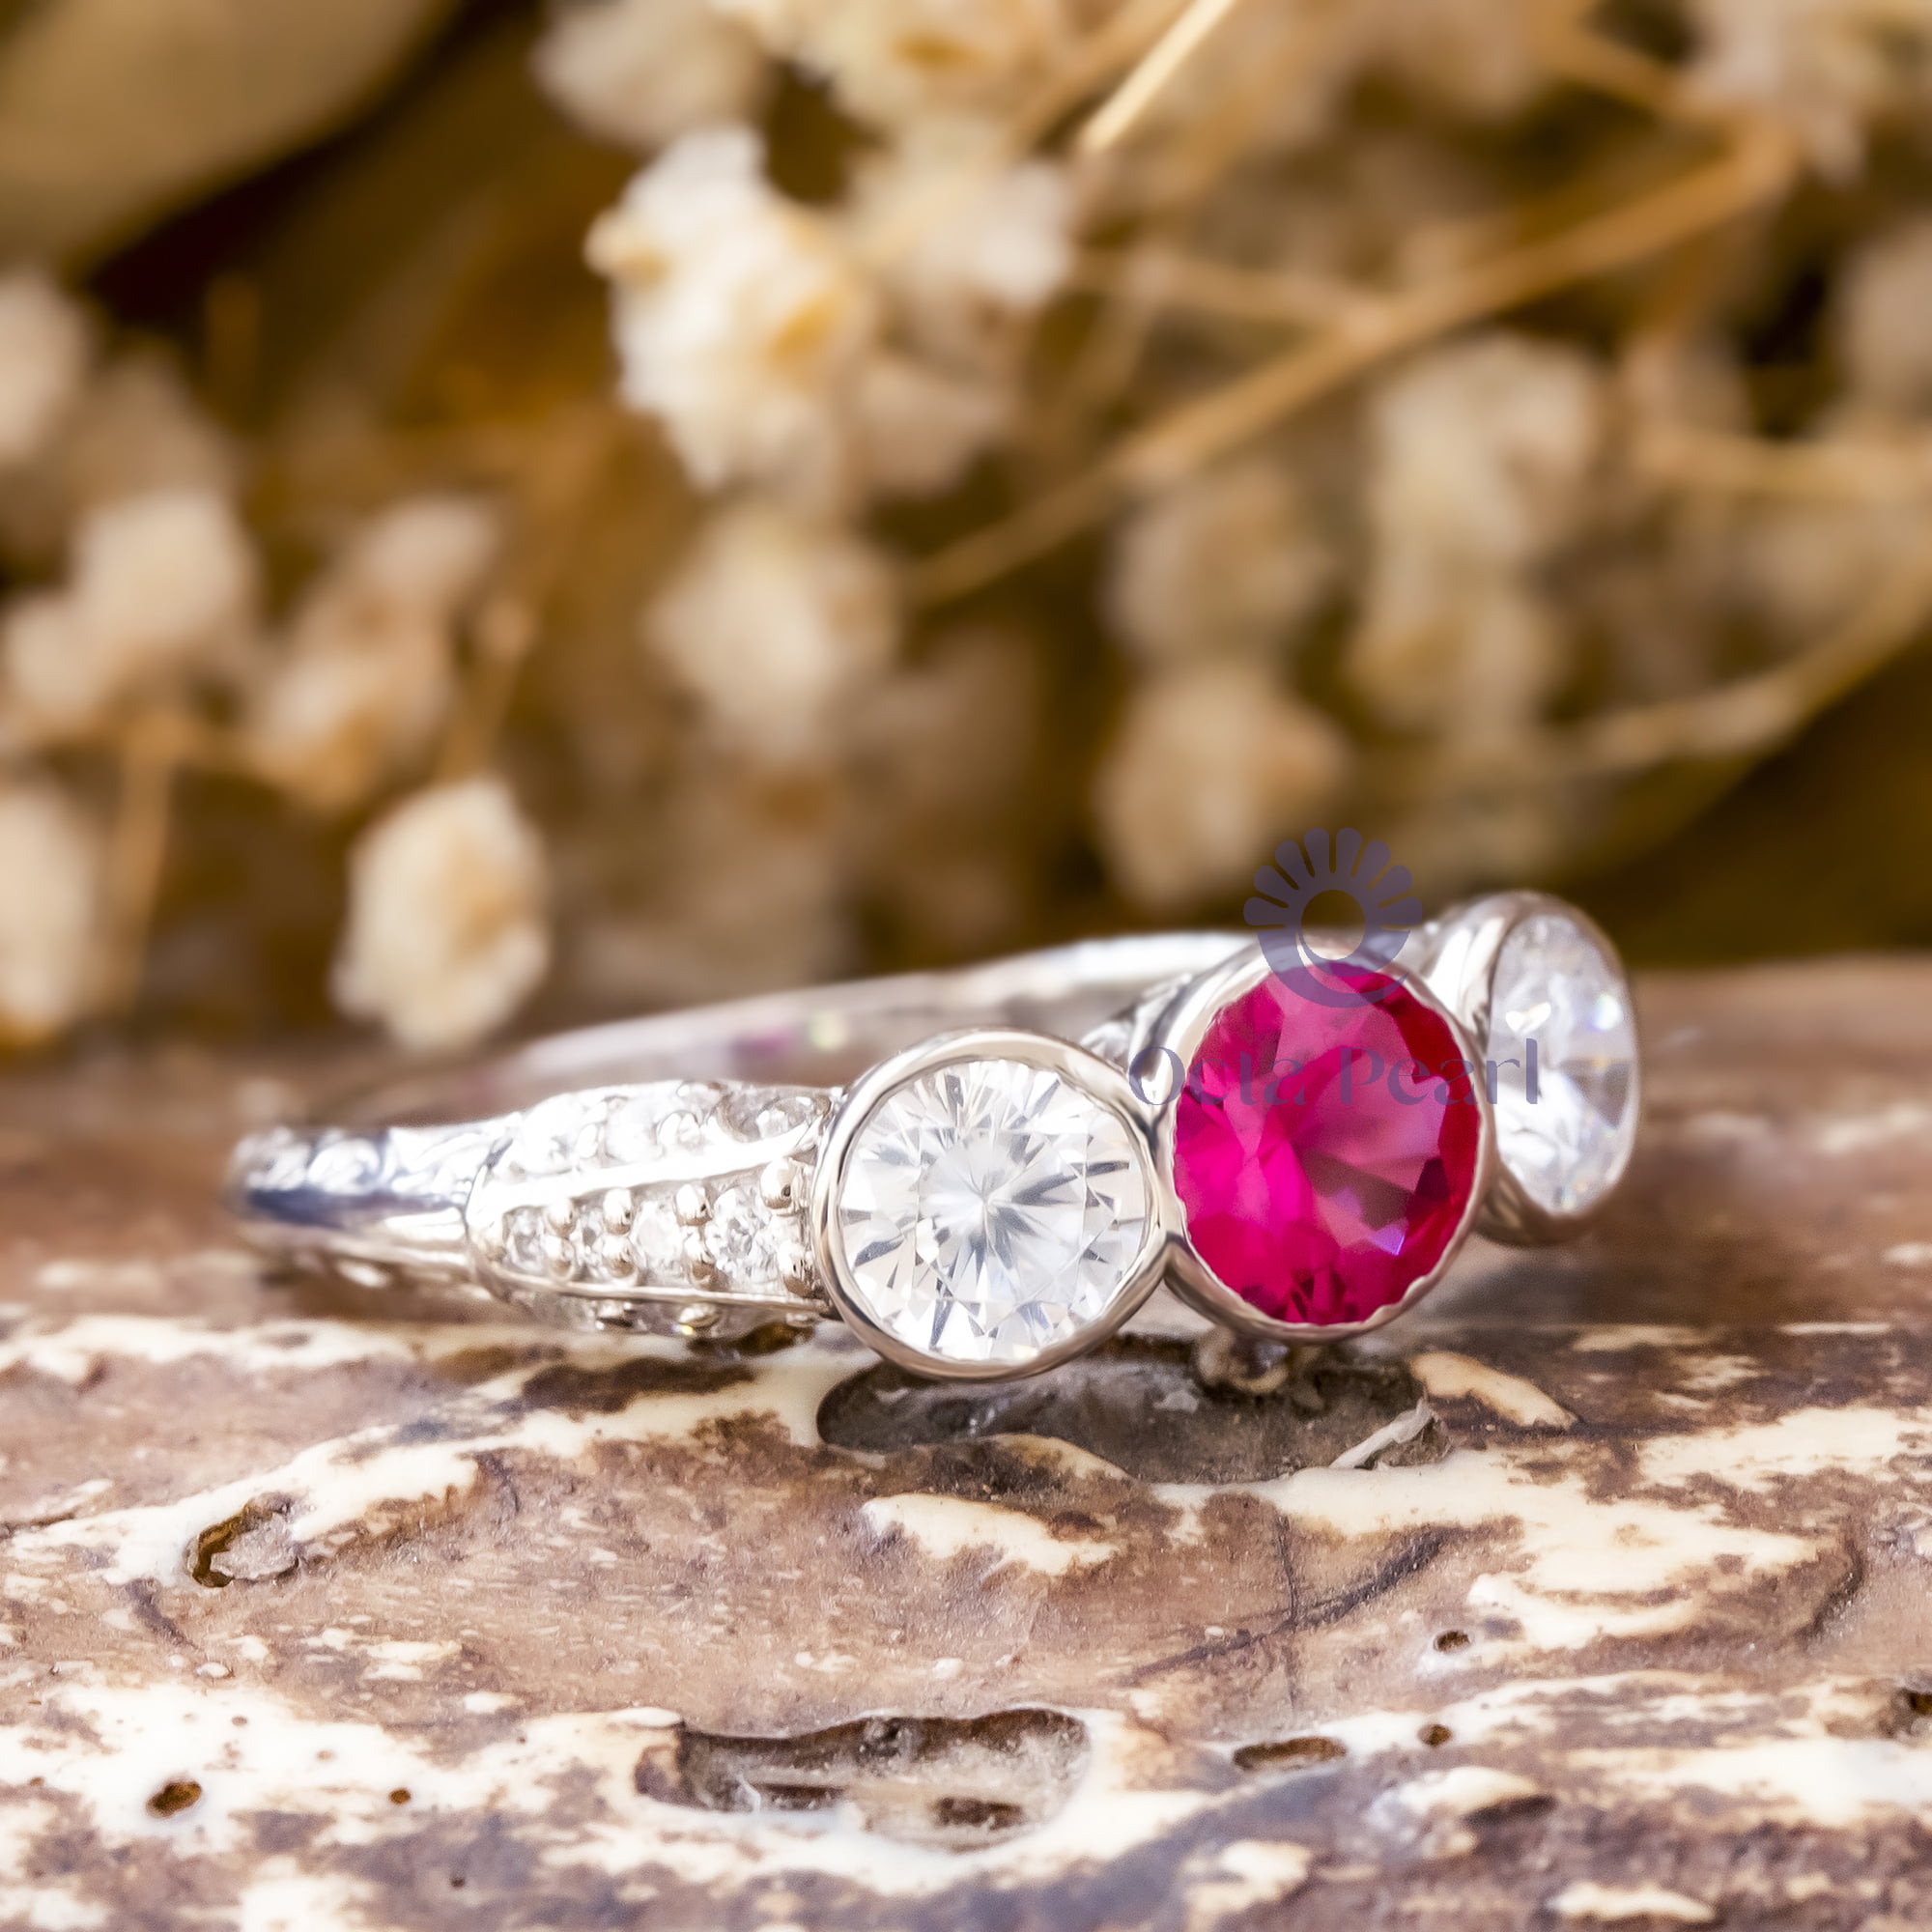 Pink Vintage style Wedding Ring